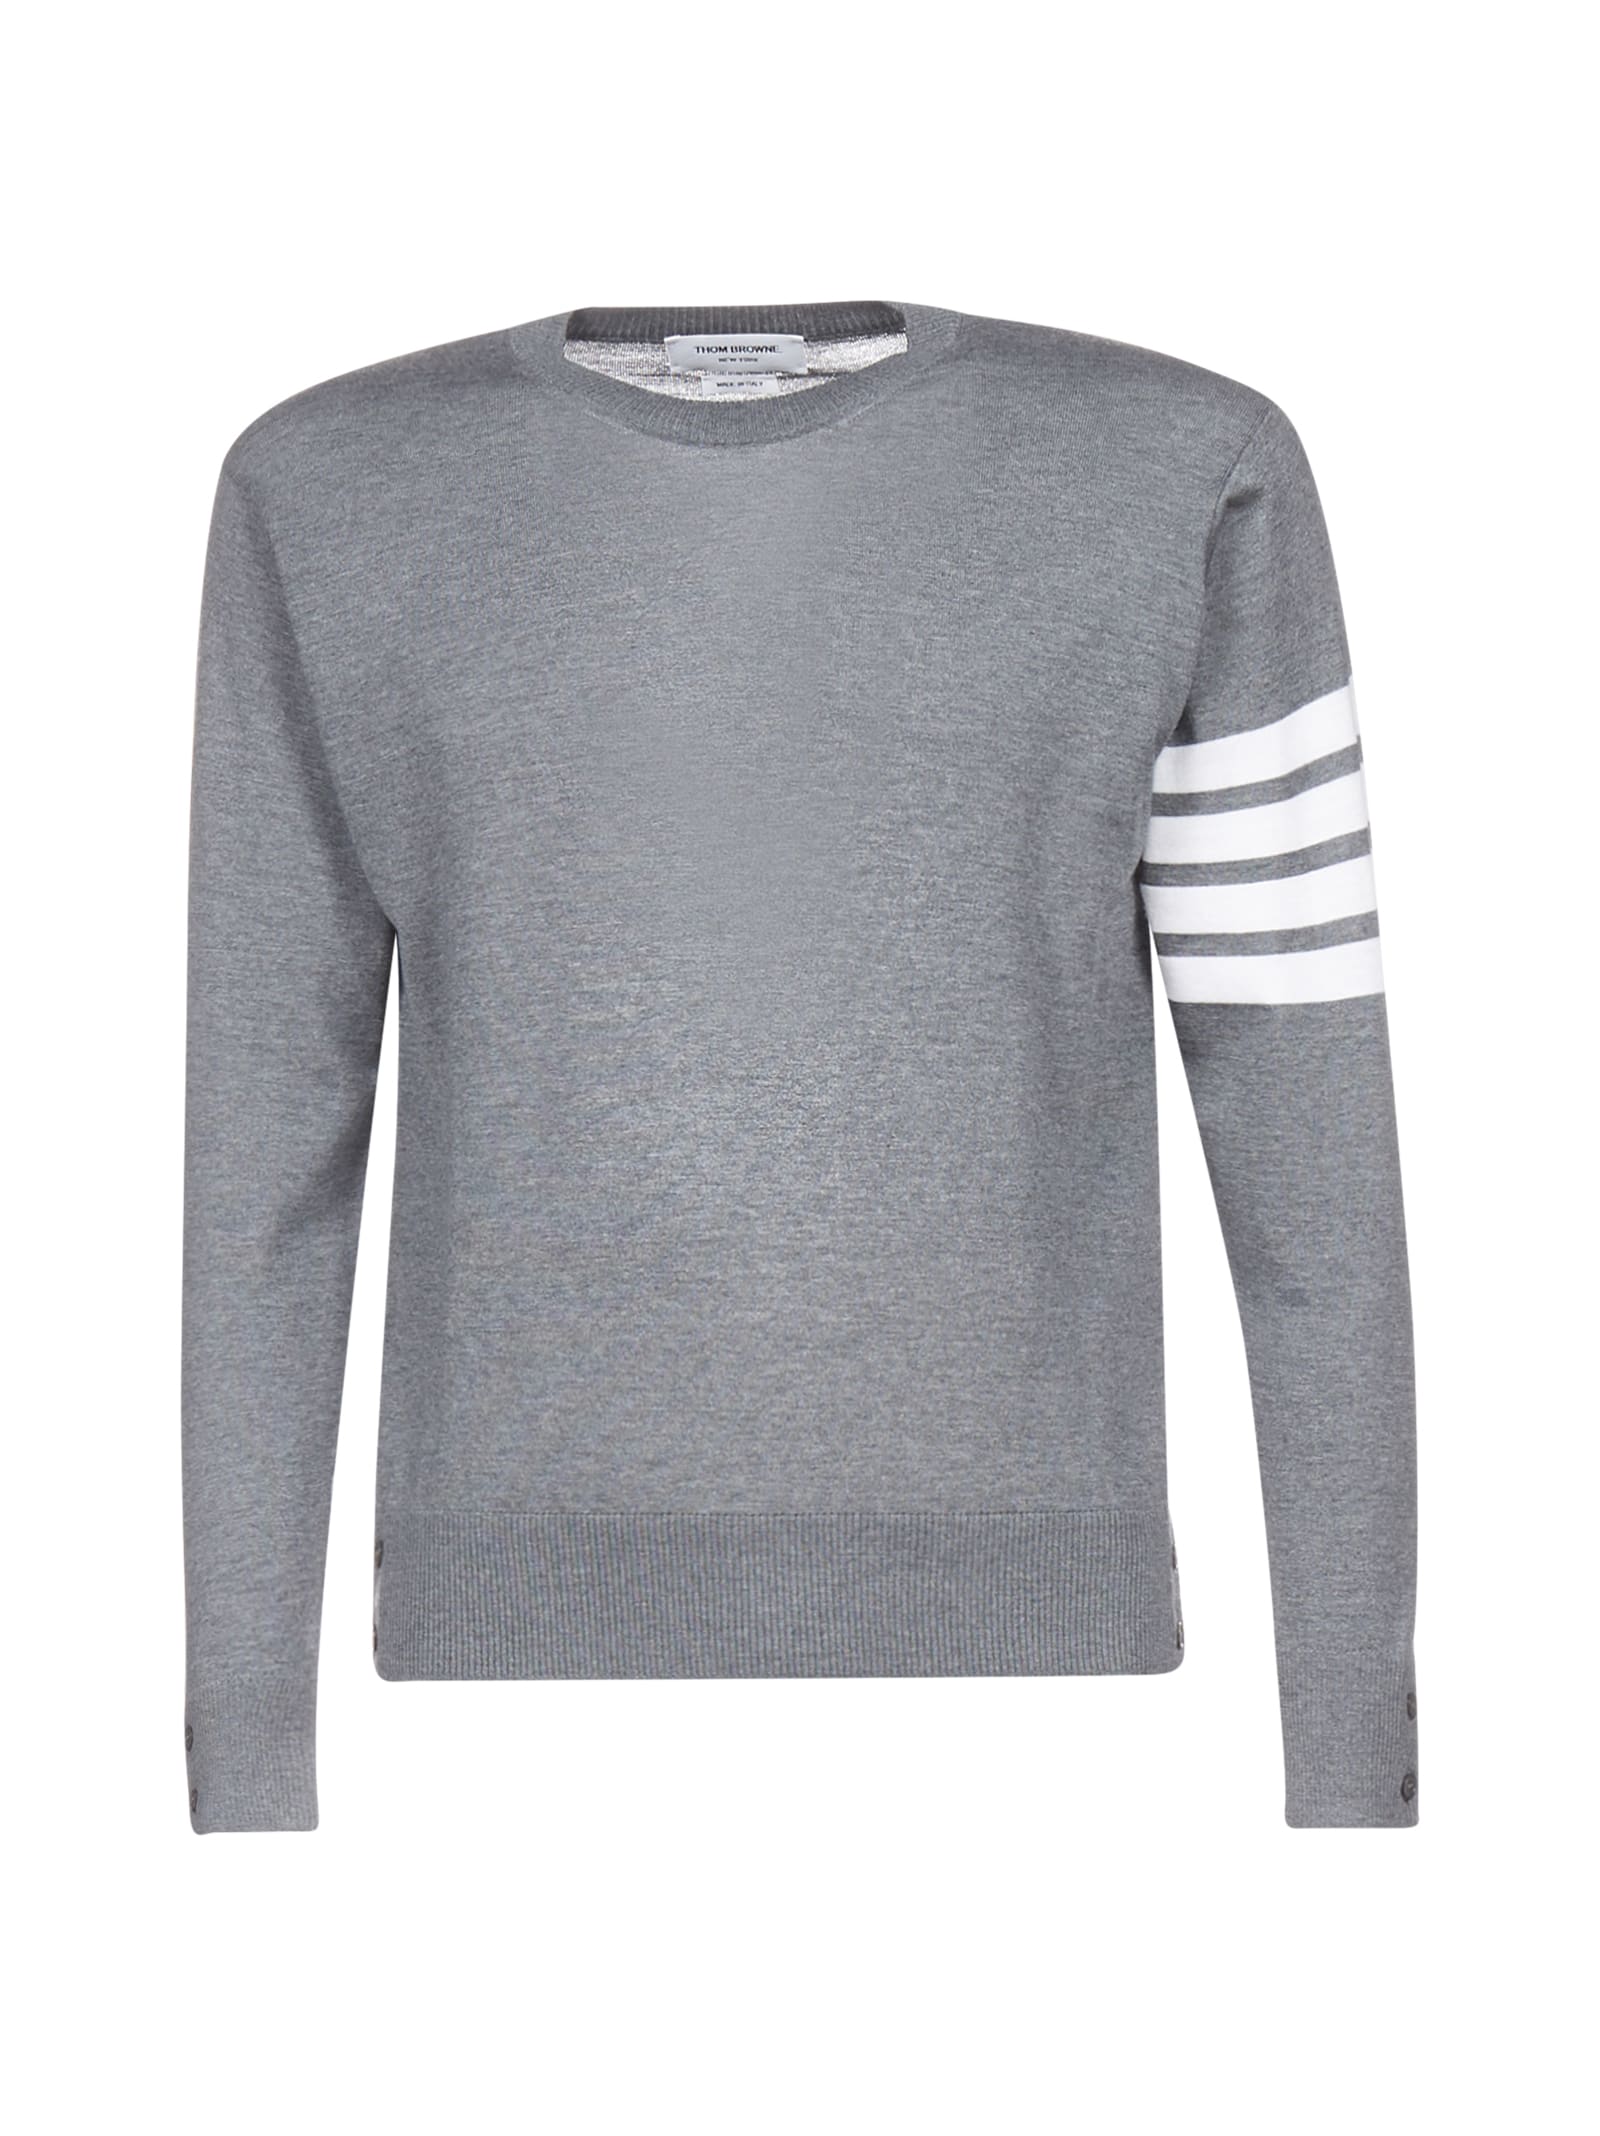 Thom Browne Thom Browne Sweater - Med grey - 10997343 | italist